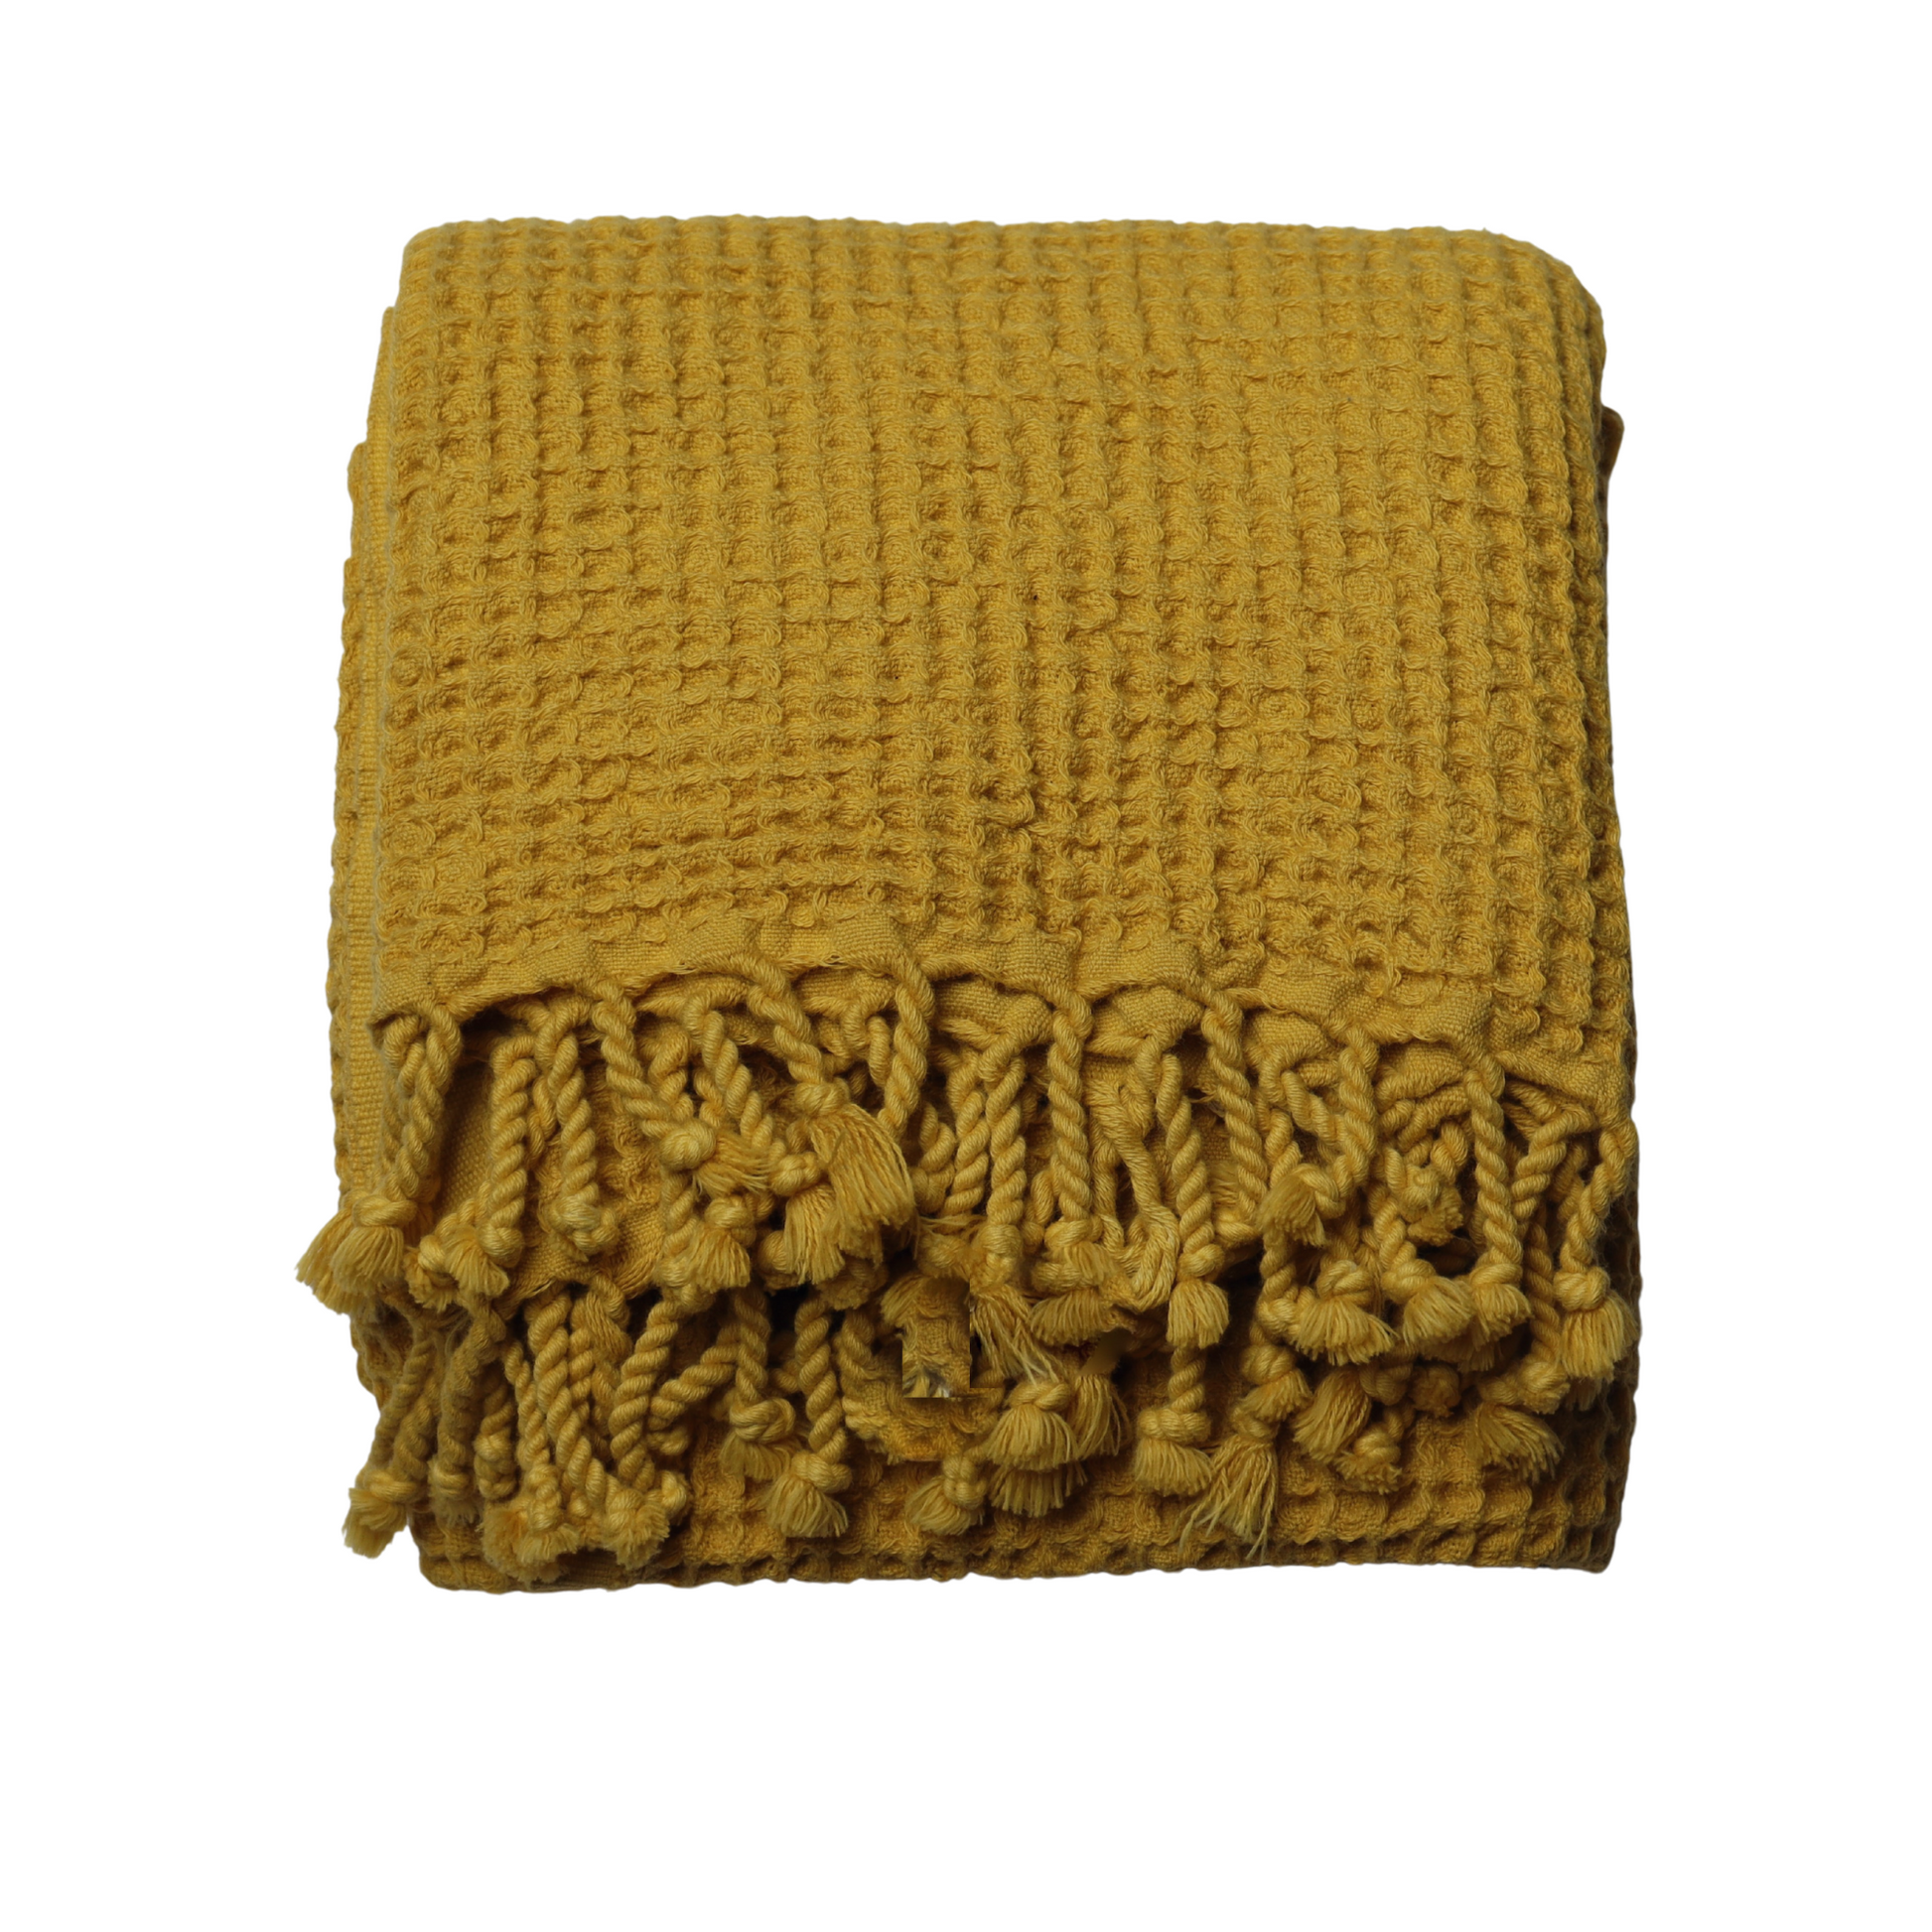 Yellow Flower Block Print Waffle Weave Hand Towel by World Market